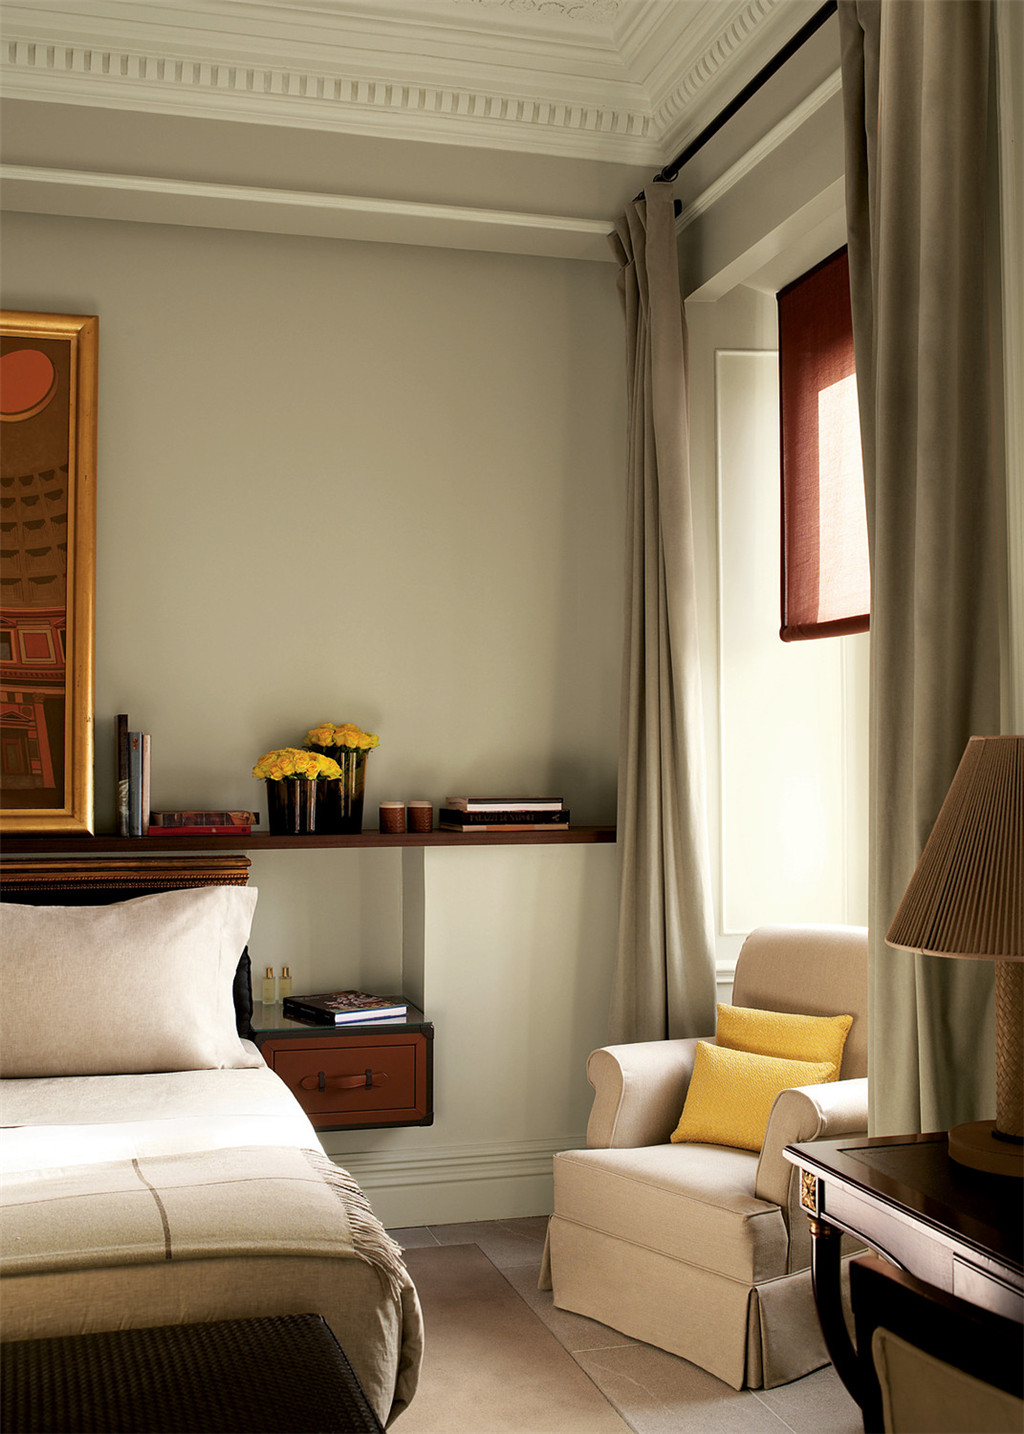 42)The St. Regis Grand Hotel, RomeBottega Veneta Suite - Canova Room detail Ĕz.jpg